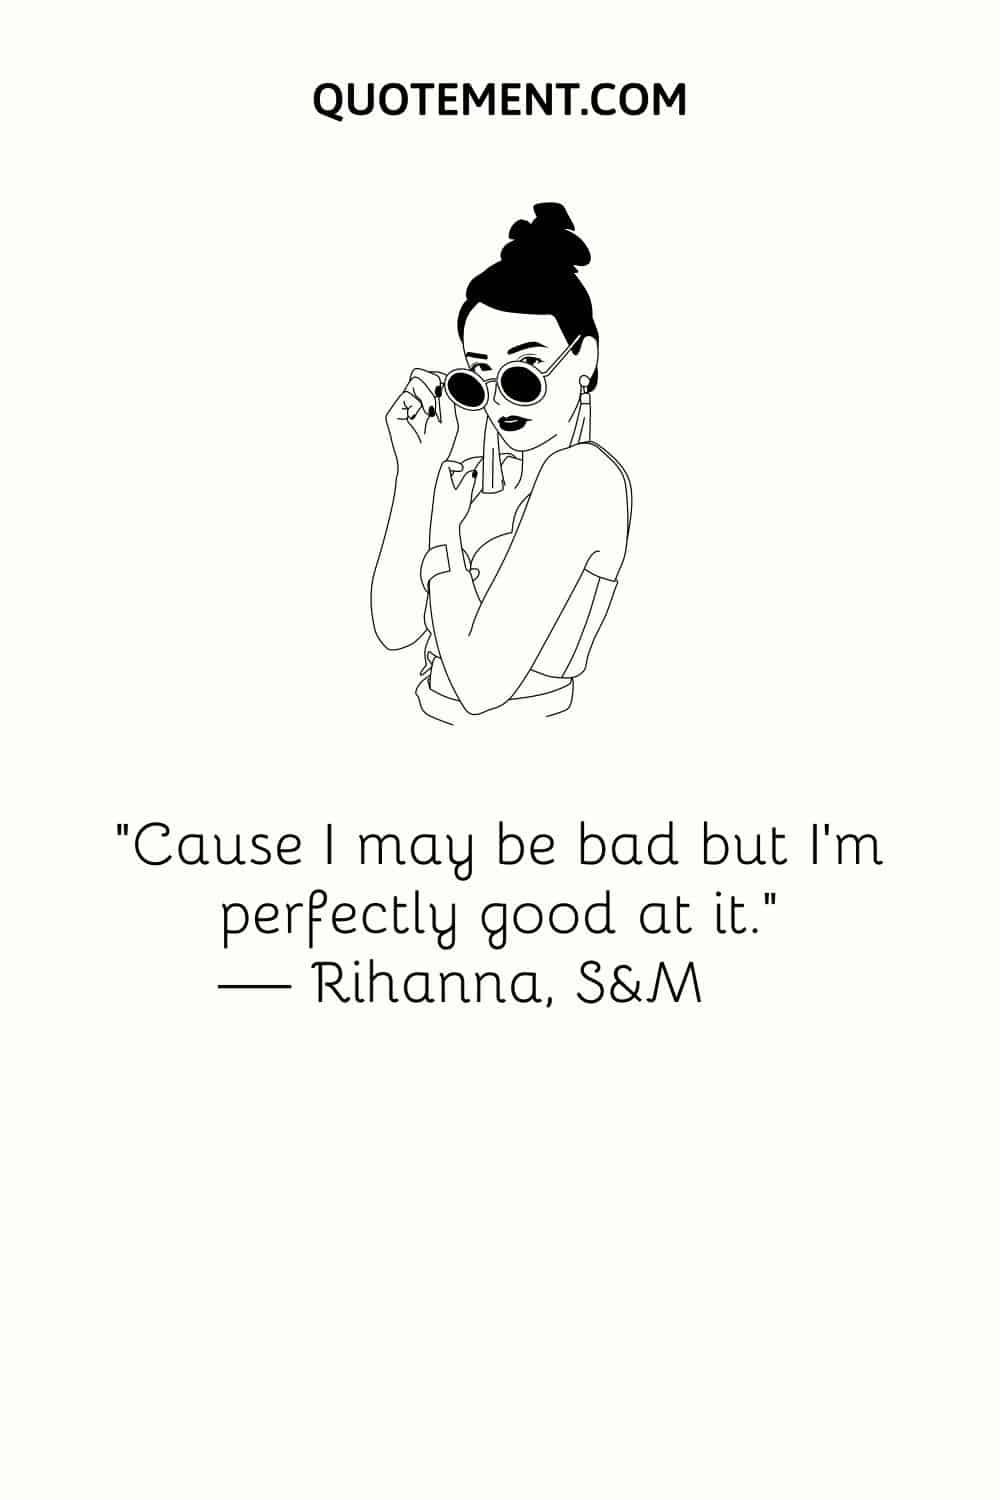 “’Cause I may be bad but I’m perfectly good at it.” — Rihanna, S&M